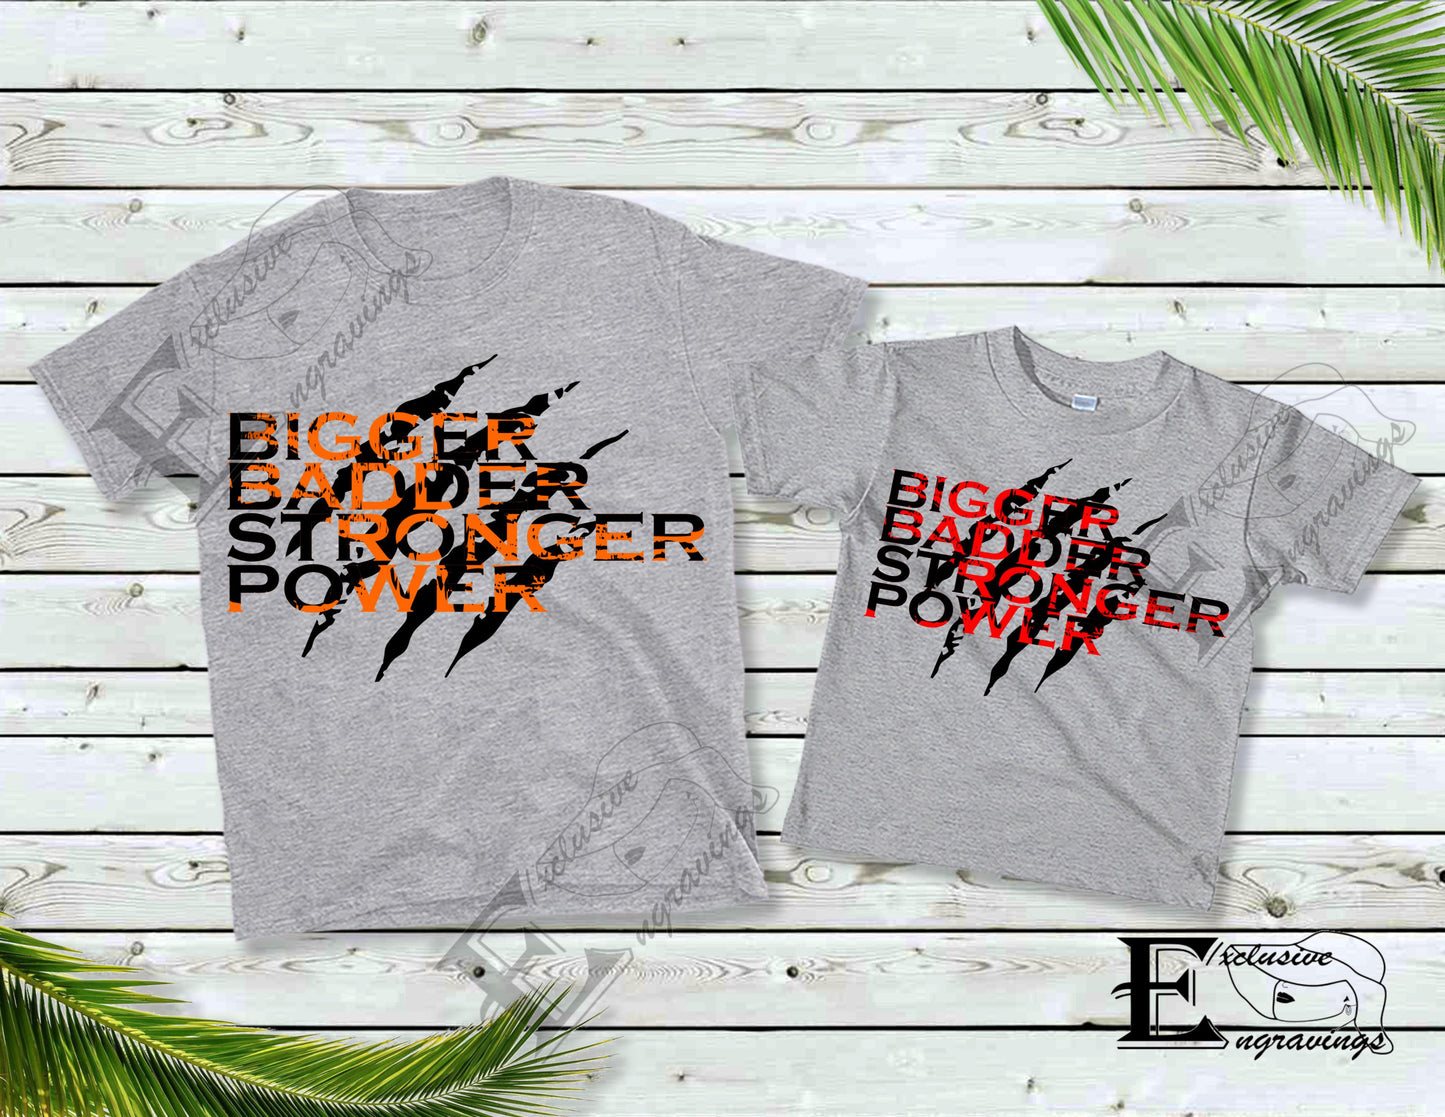 "Bigger Badder Stronger Power Claw" T-shirt